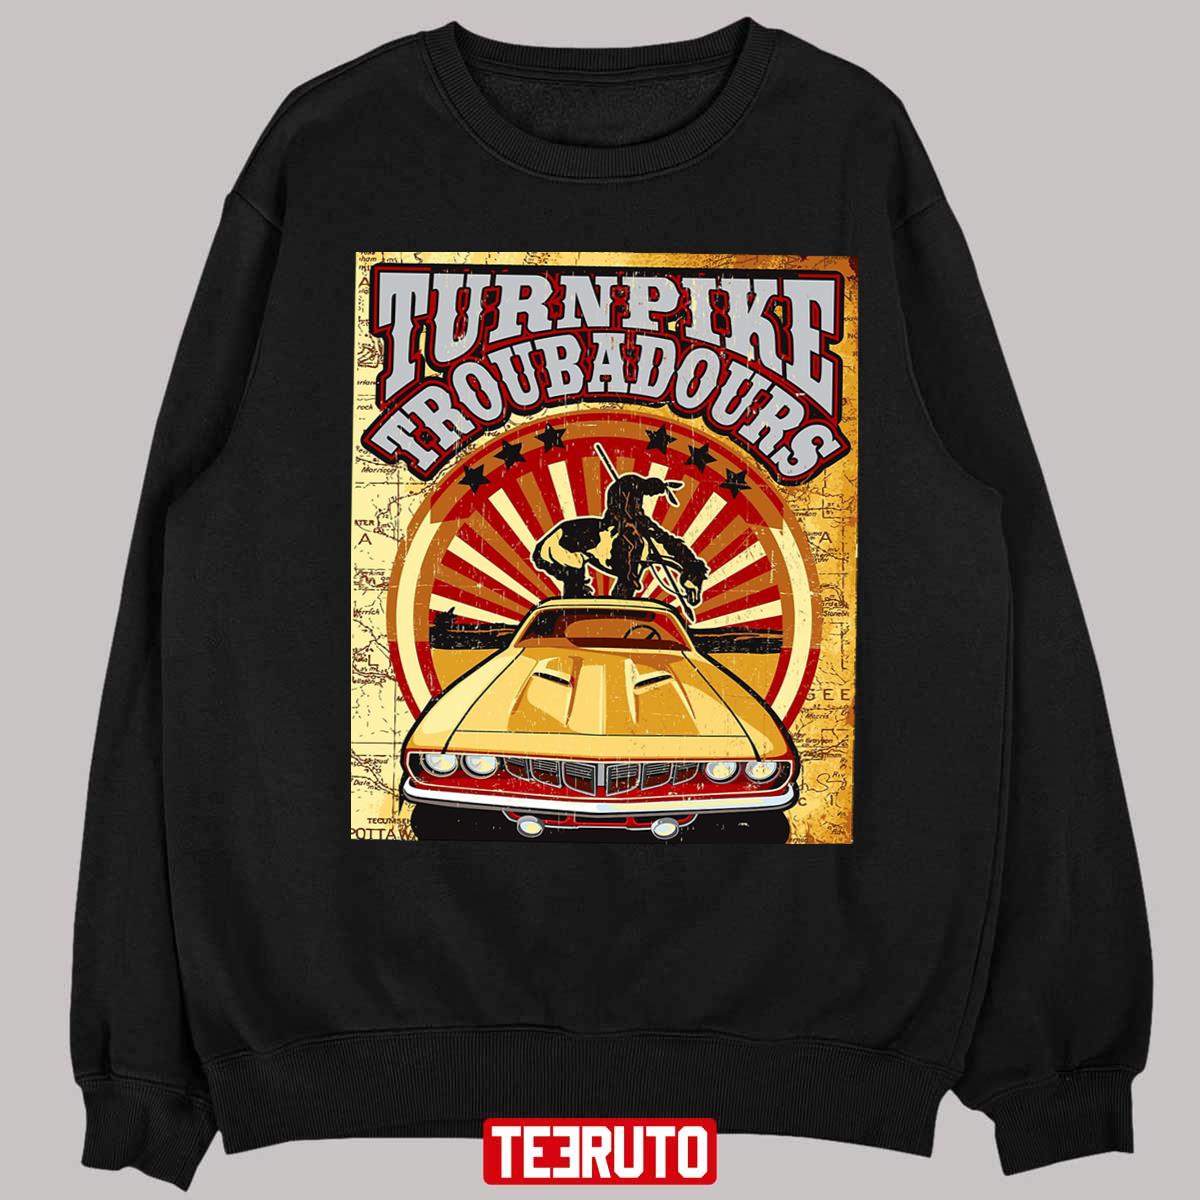 Vintage Style Turnpike Troubadours Unisex T-Shirt